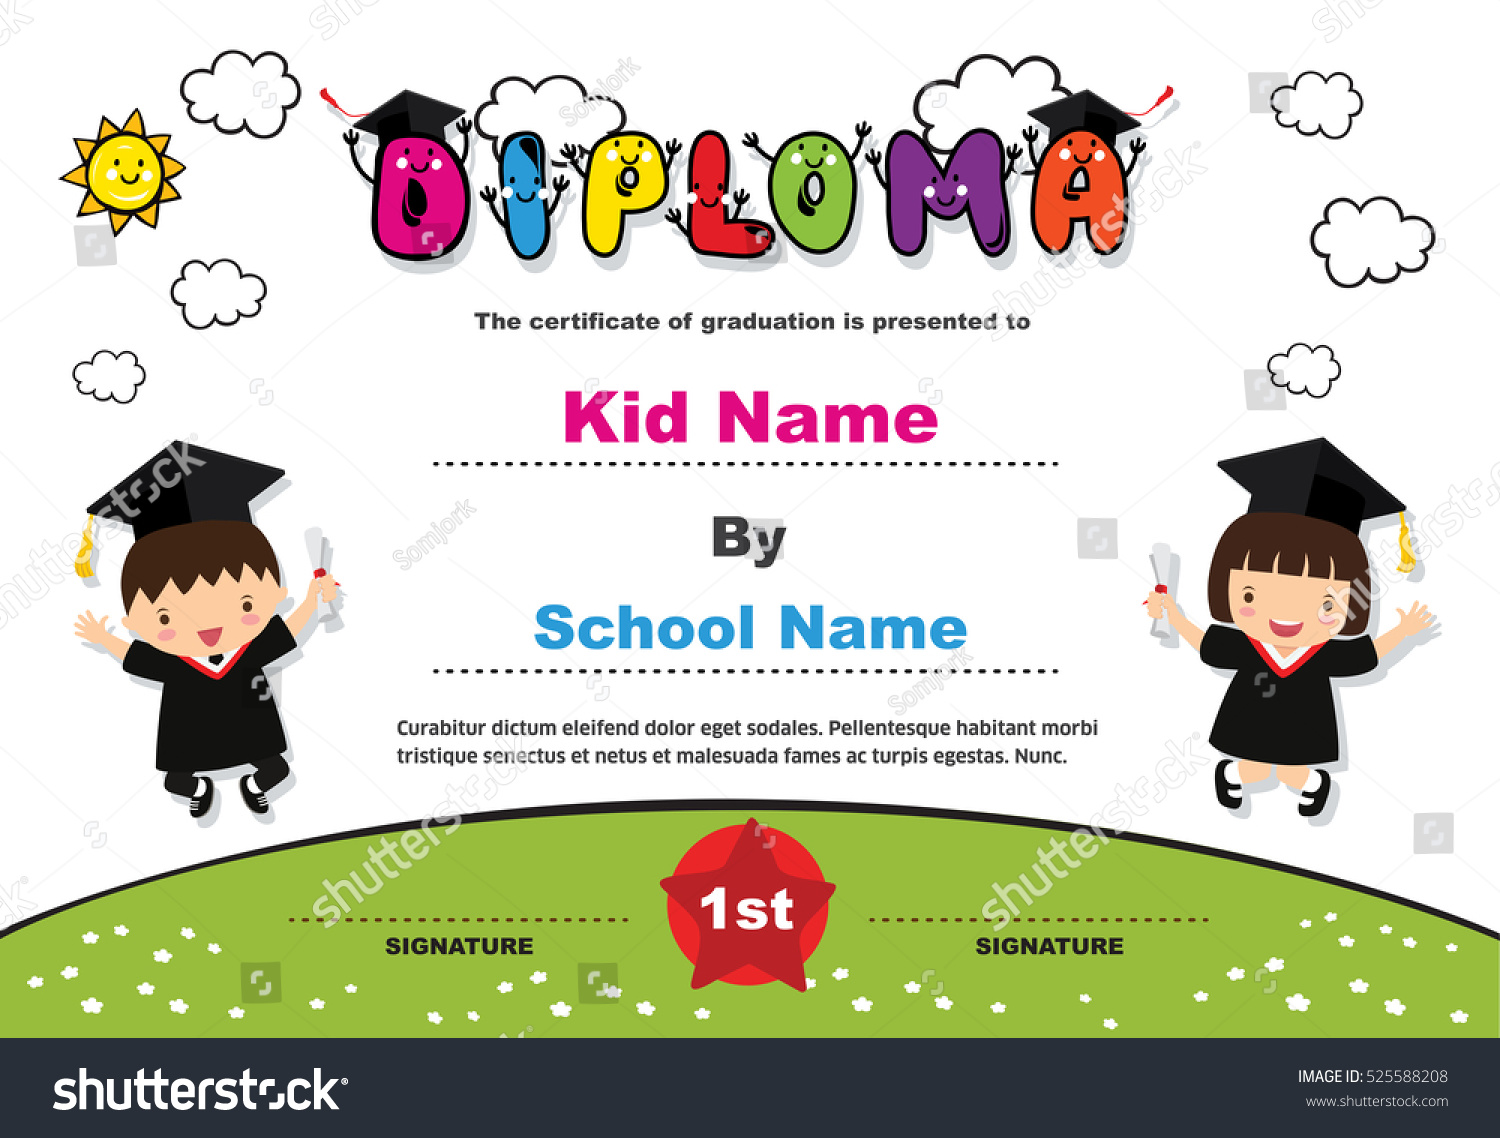 Certificate Background Design For Kids